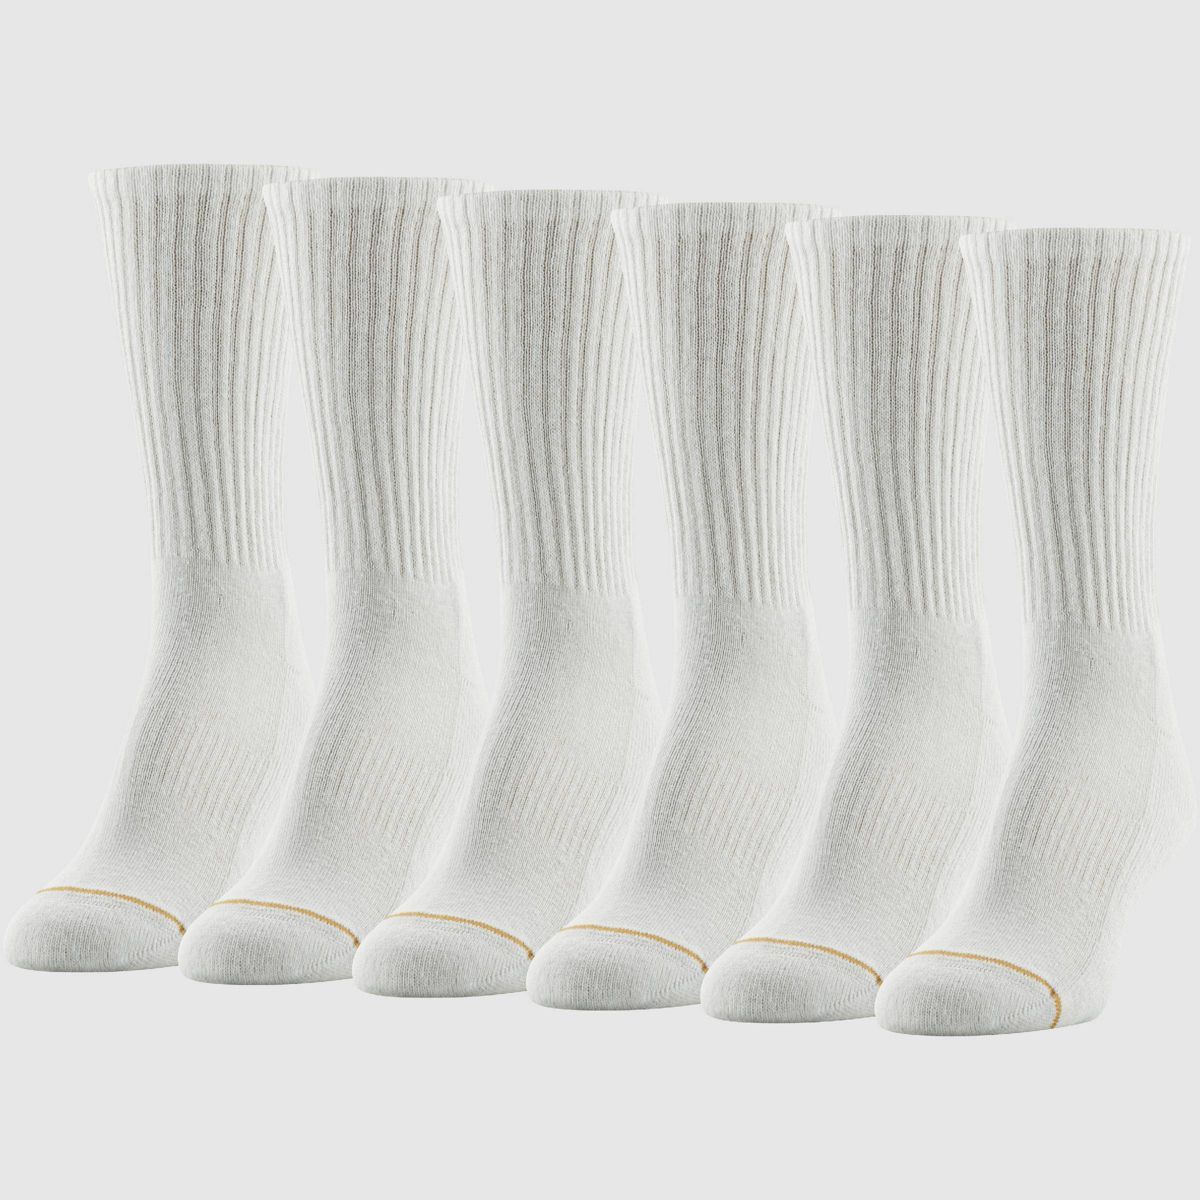 All Pro Women's 6pk Crew Cotton Athletic Socks - White 4-10 | Target